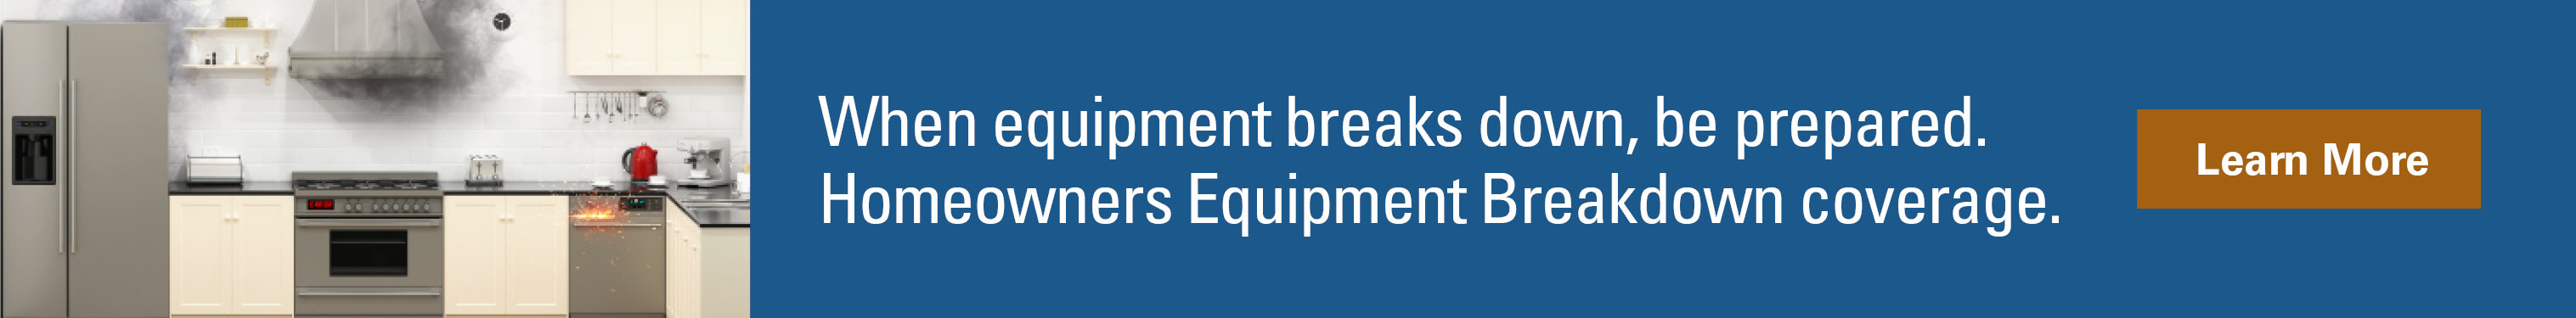 Equipment Breakdown Coverage Graphic